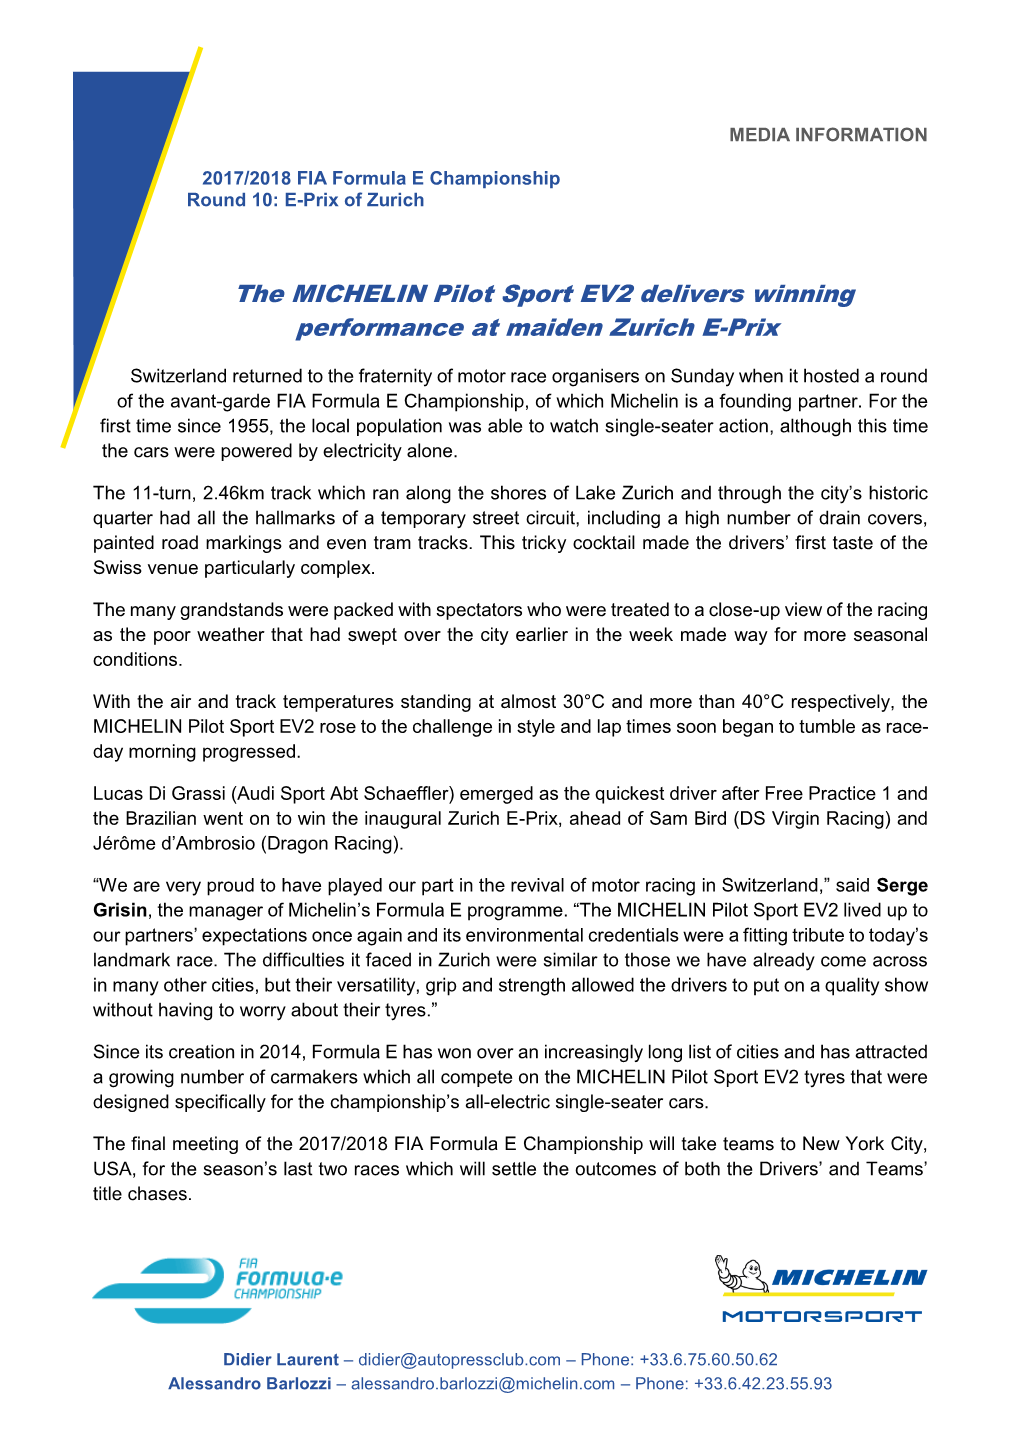 The MICHELIN Pilot Sport EV2 Delivers Winning Performance at Maiden Zurich E-Prix